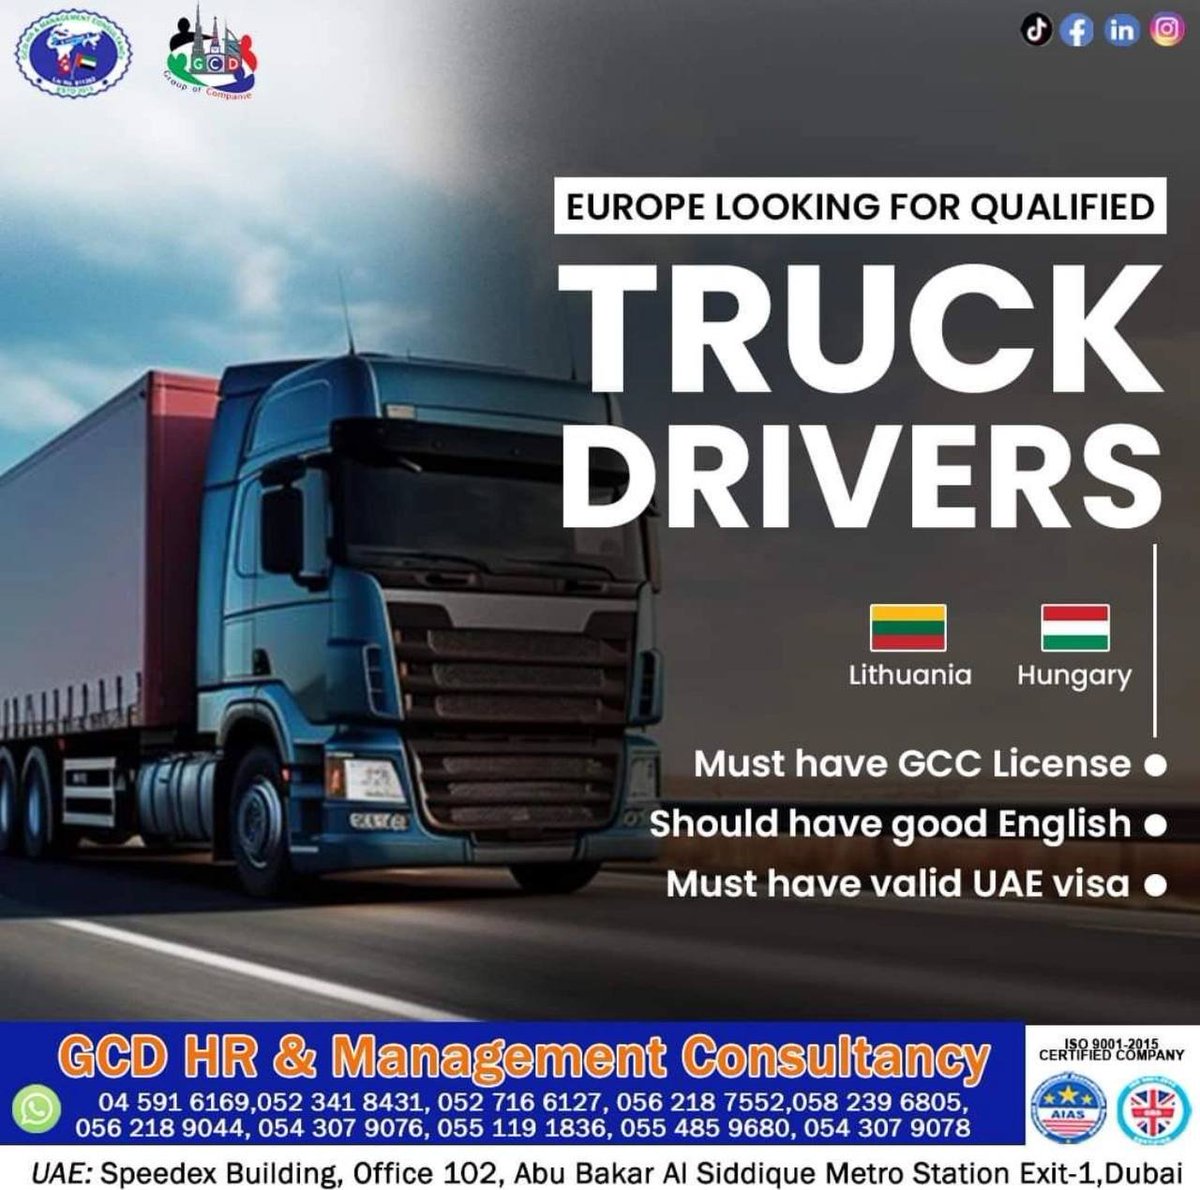 Hiring Qualified Truck Drivers in UAE

#Jobs #jobopportunities #WorkFromHome